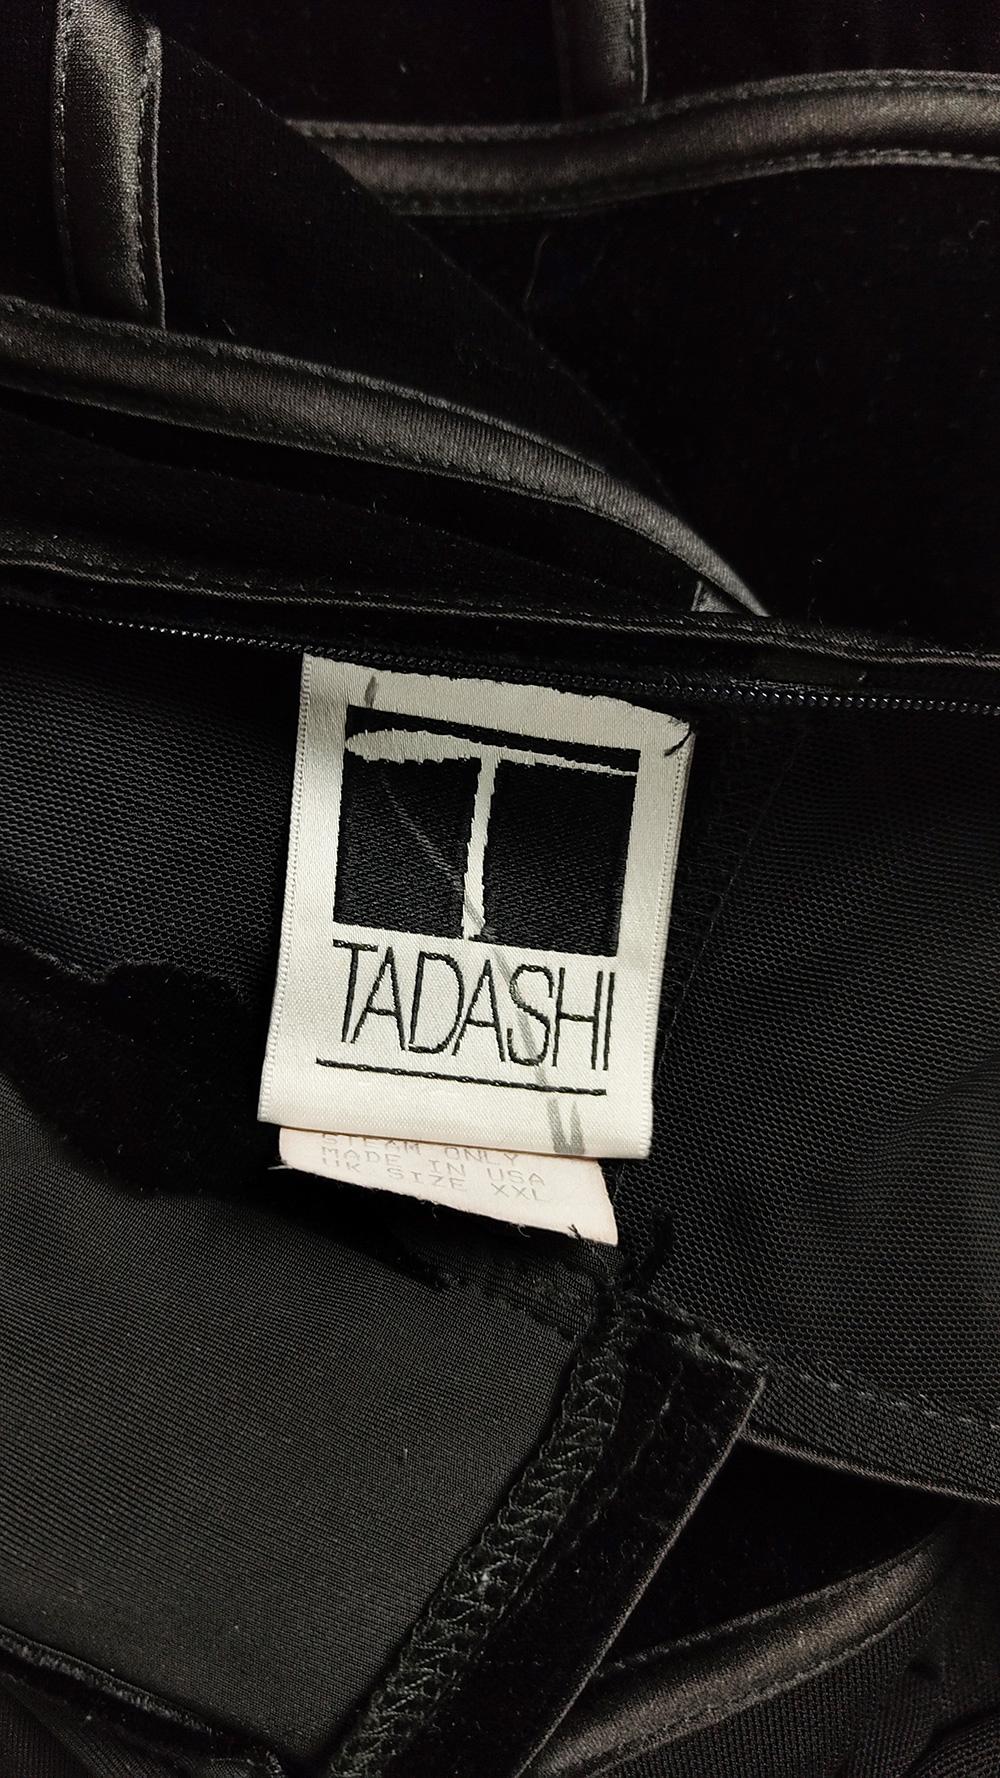 Tadashi Vintage Semi Sheer Cut Out Panels Black Velvet Evening Dress, 1990s For Sale 4